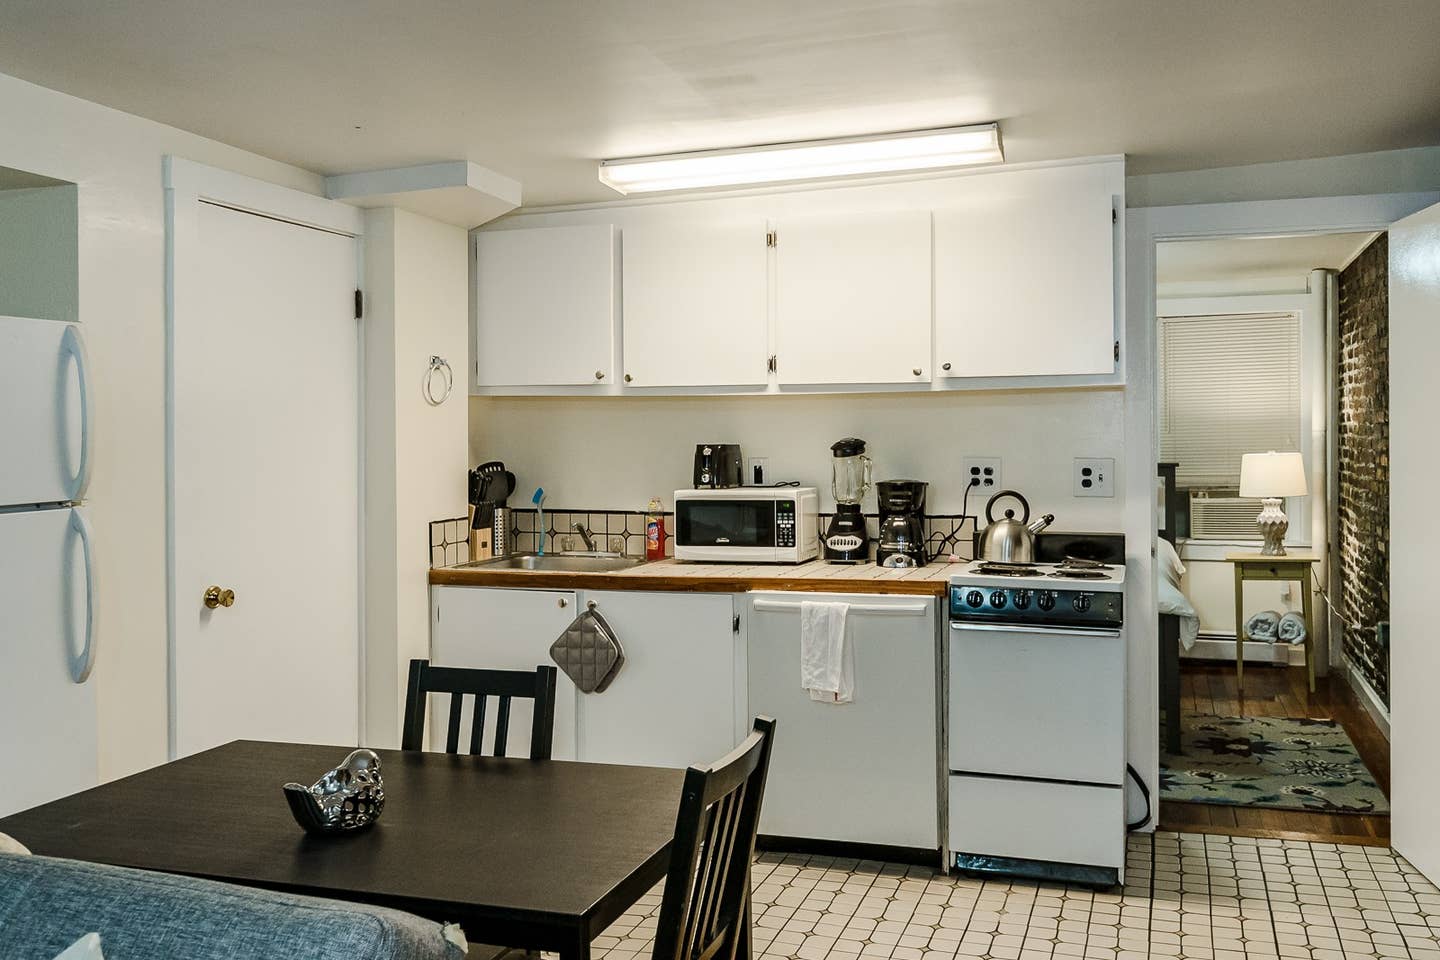 Photos of apartment on REVERE St.,Boston MA 02114